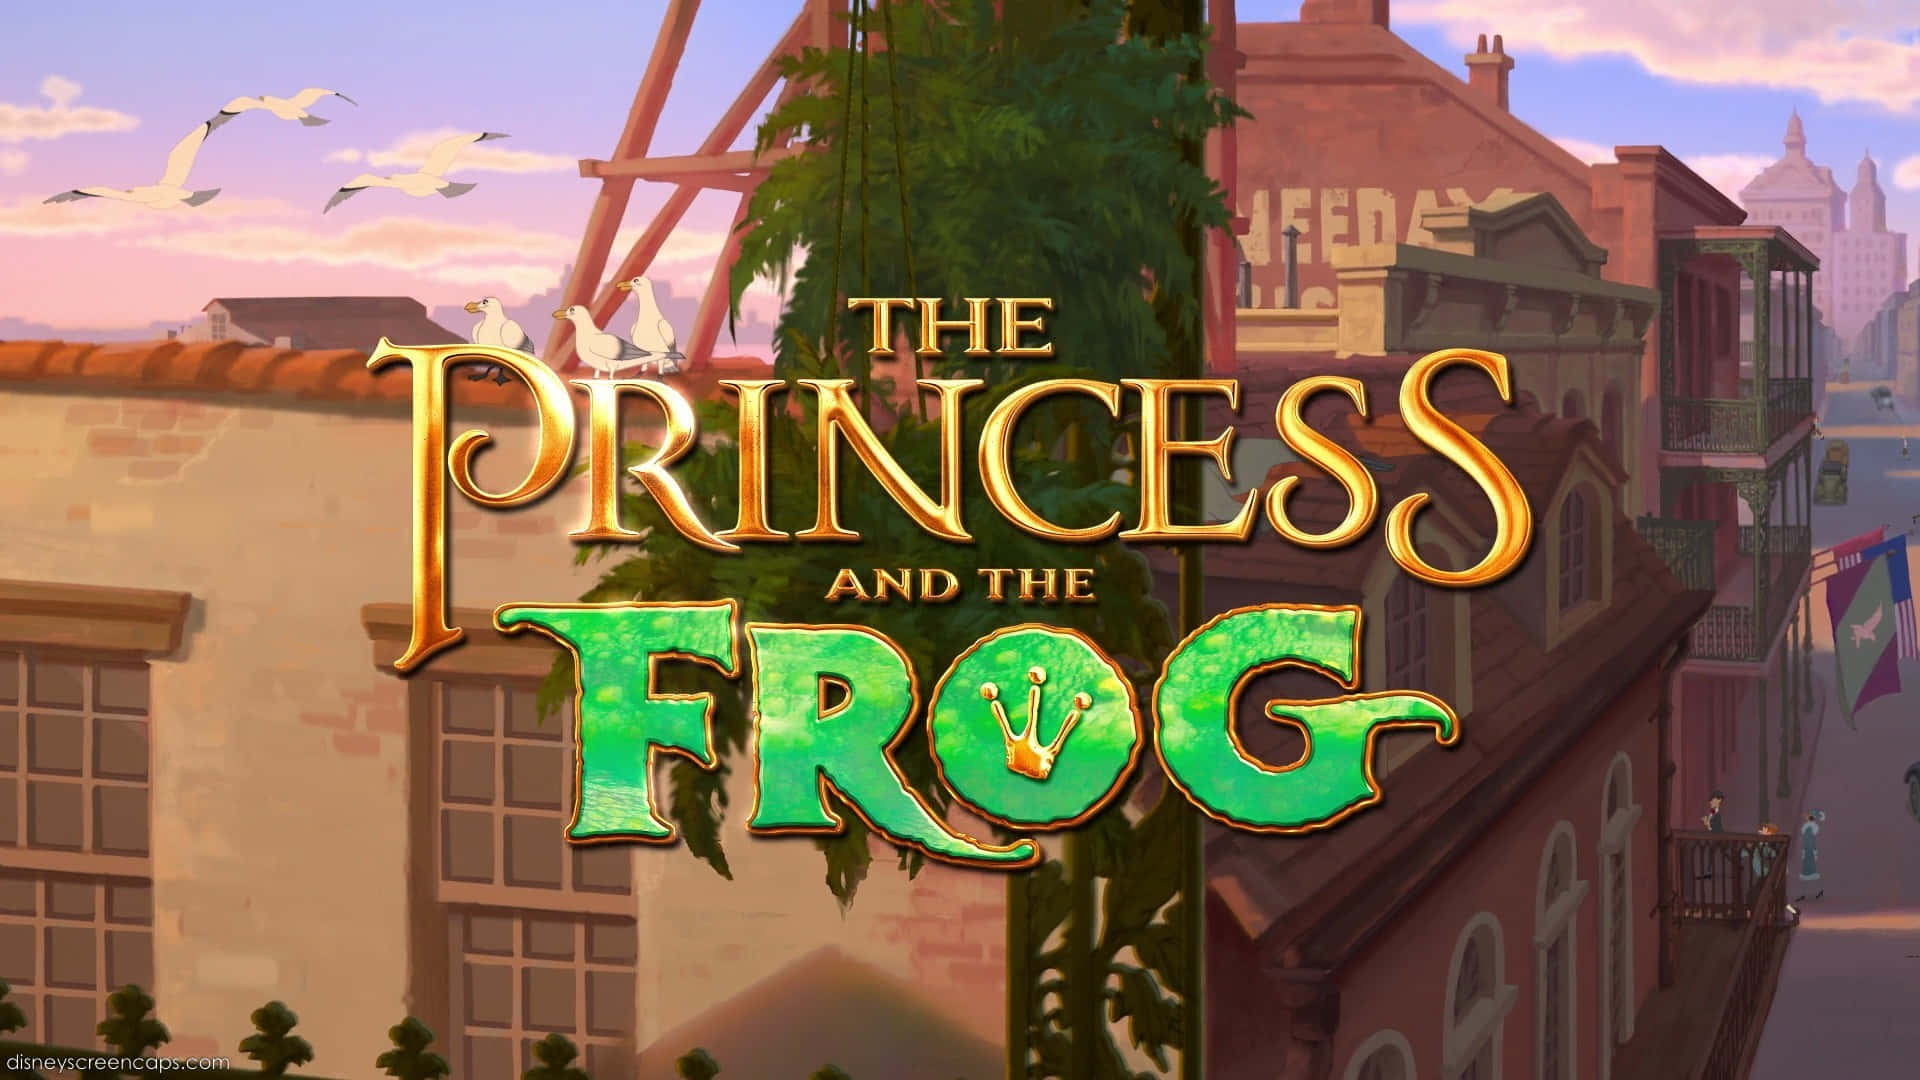 Princess Tiana brings new life to a magical swamp